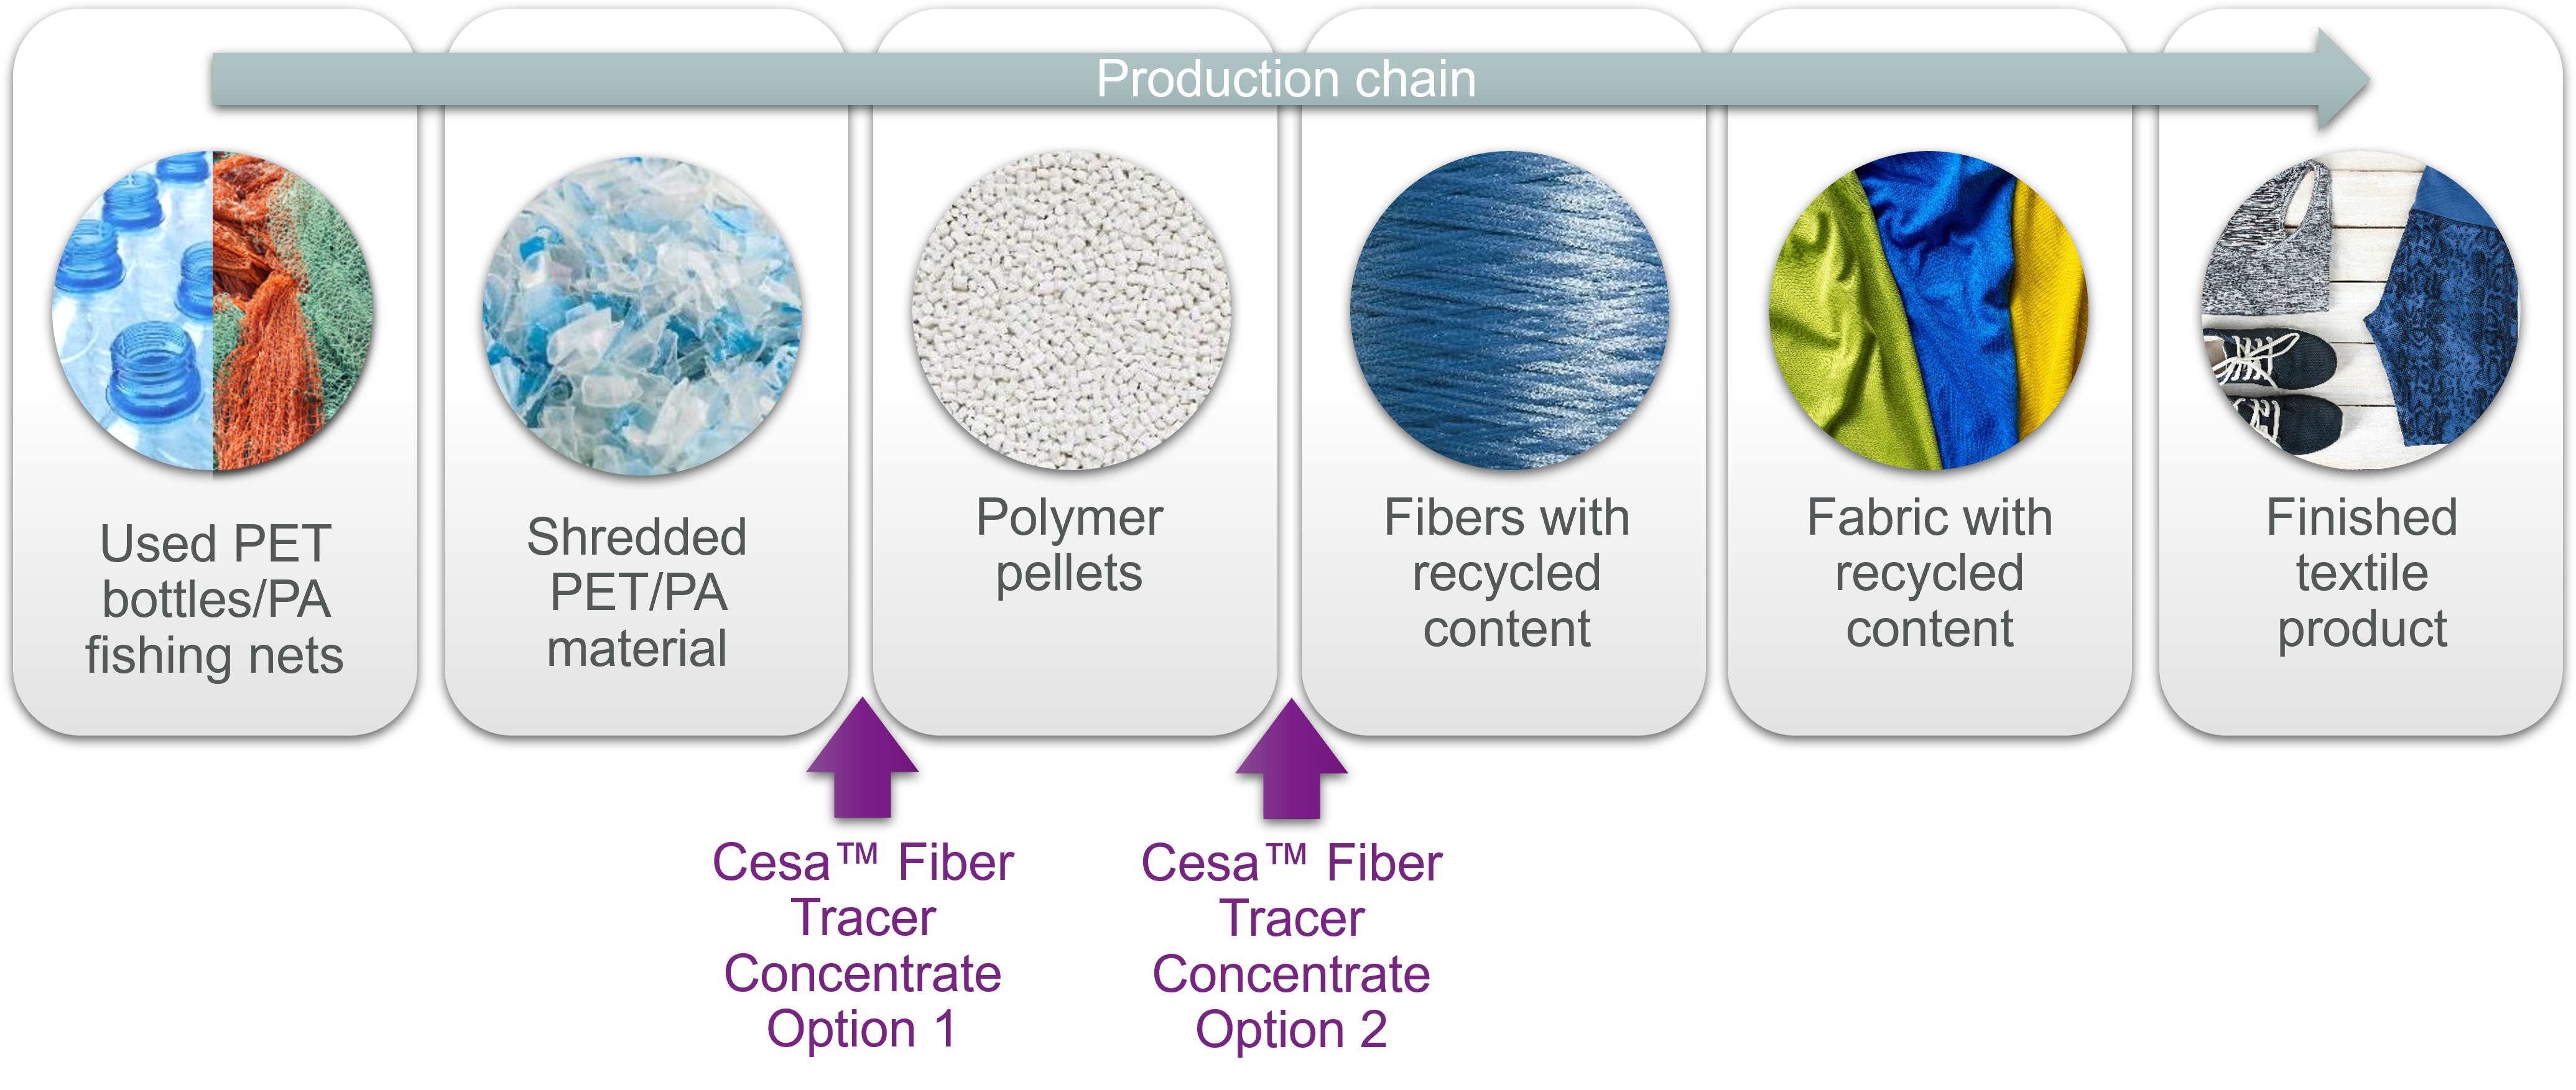 Recycled fiber